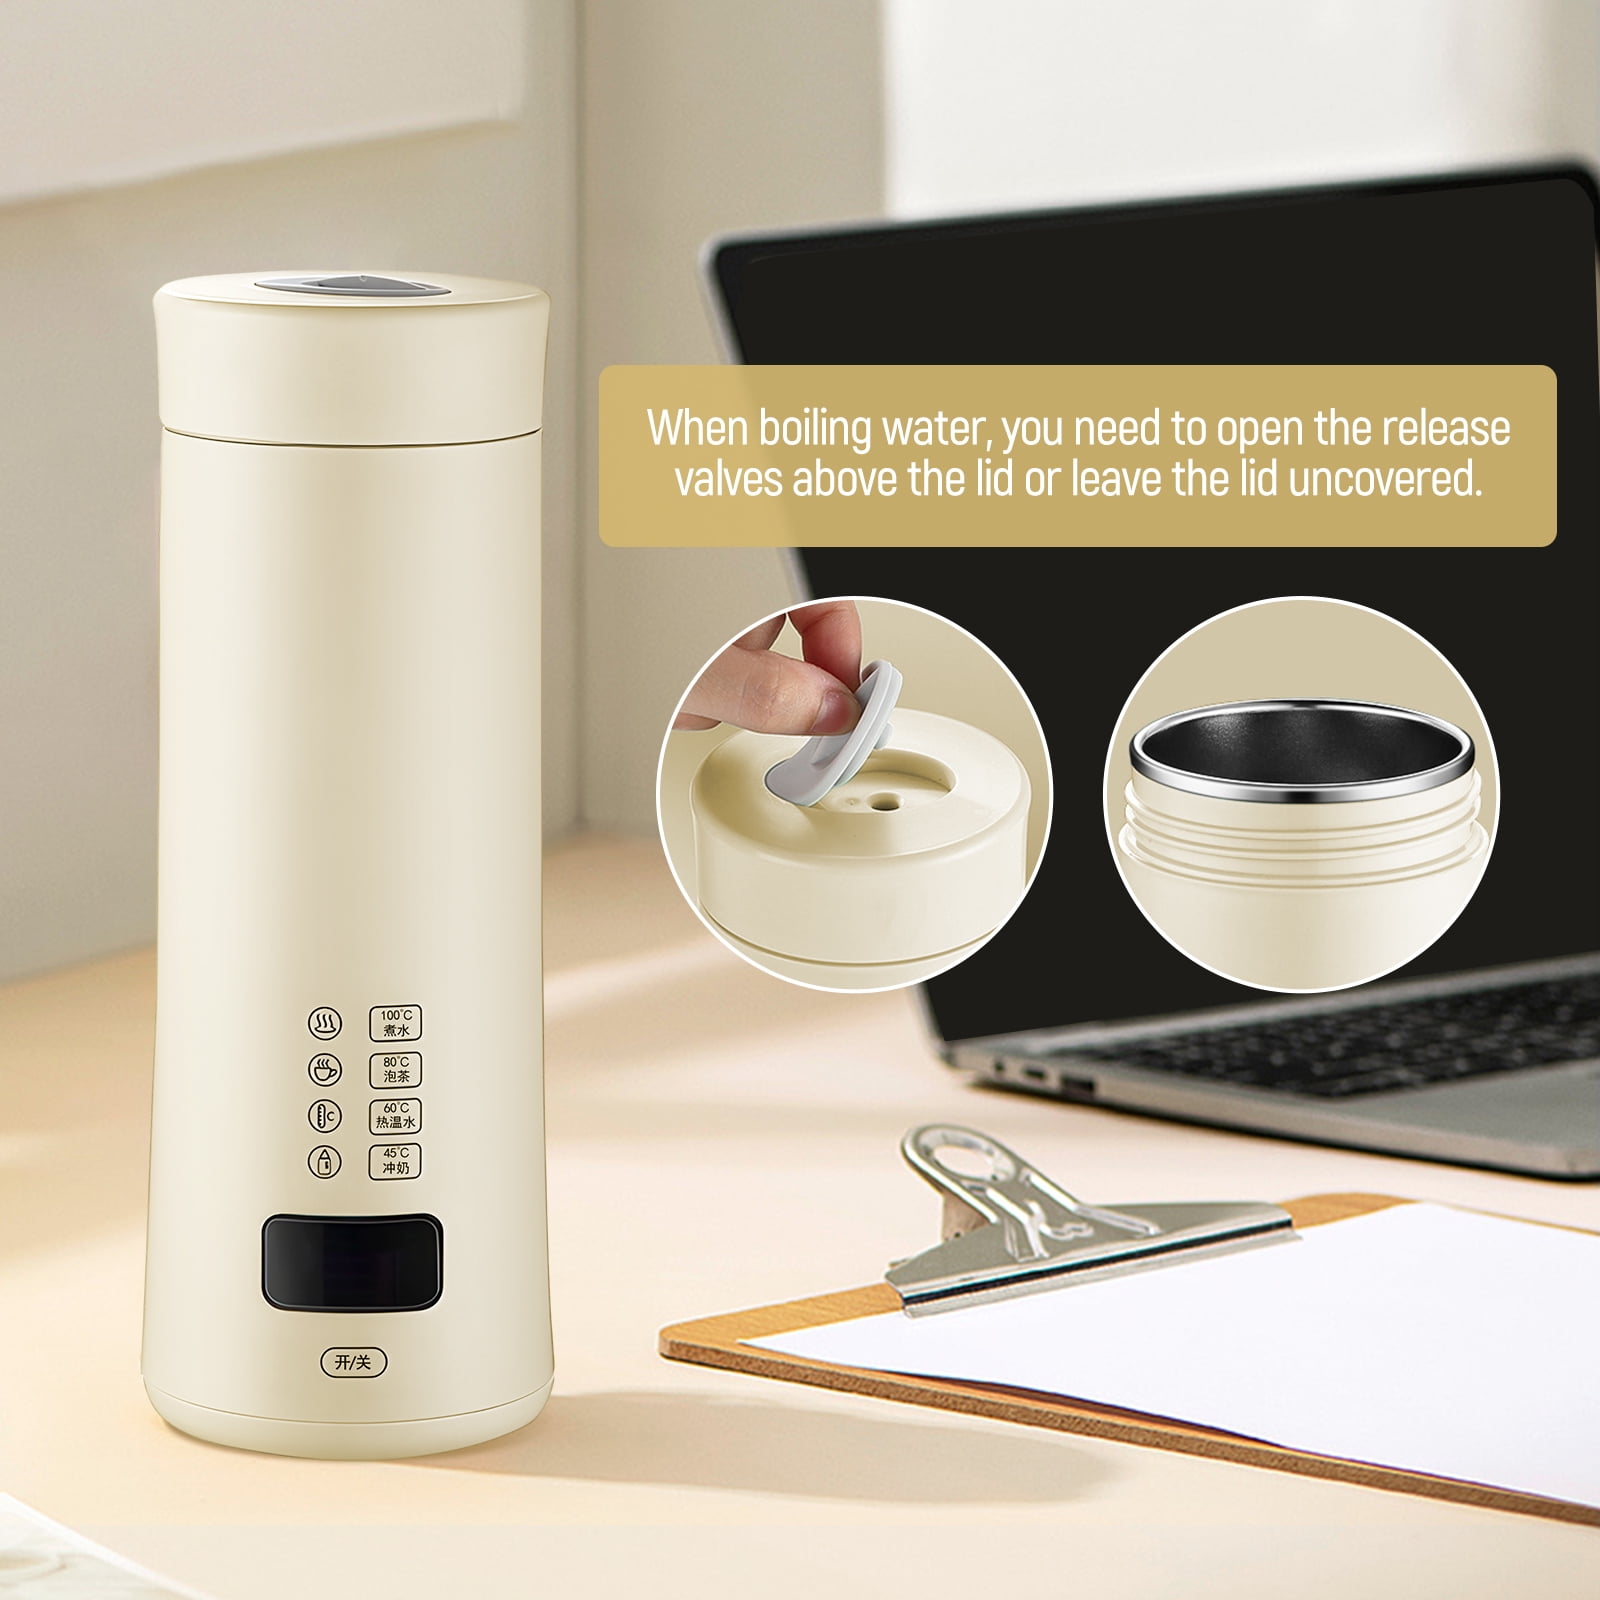 Jettle Electric Kettle - Travel Portable Heater for Coffee, Tea, Milk, –  Jettle Online Store